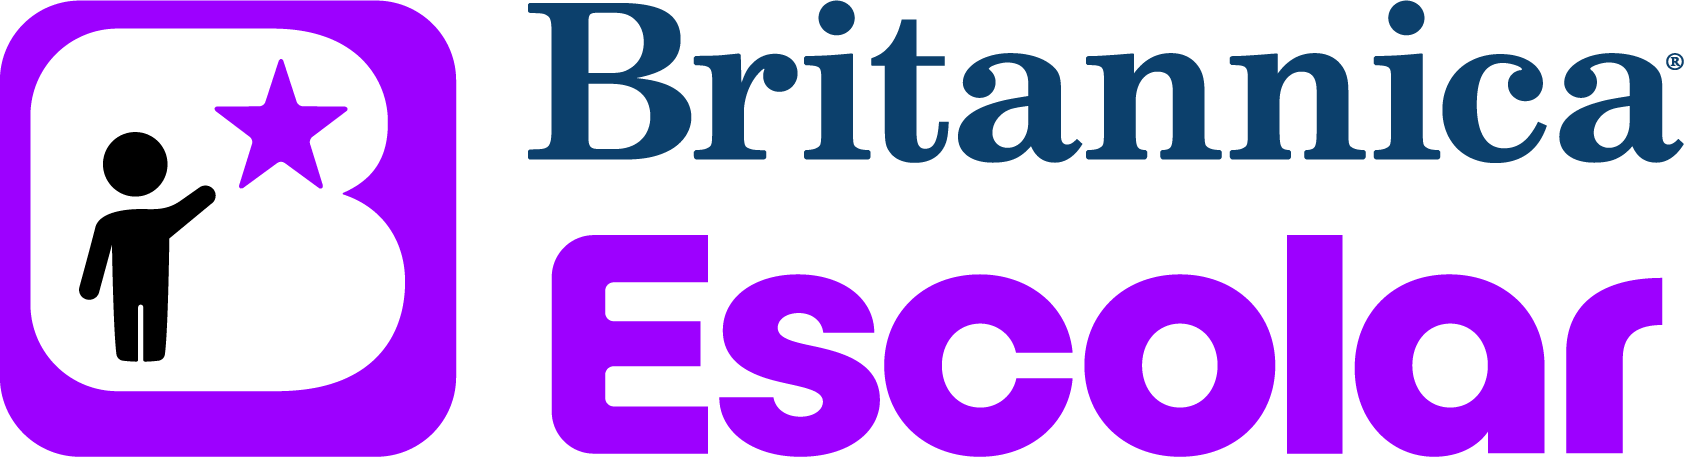 Logo for Britannica Escolar resource